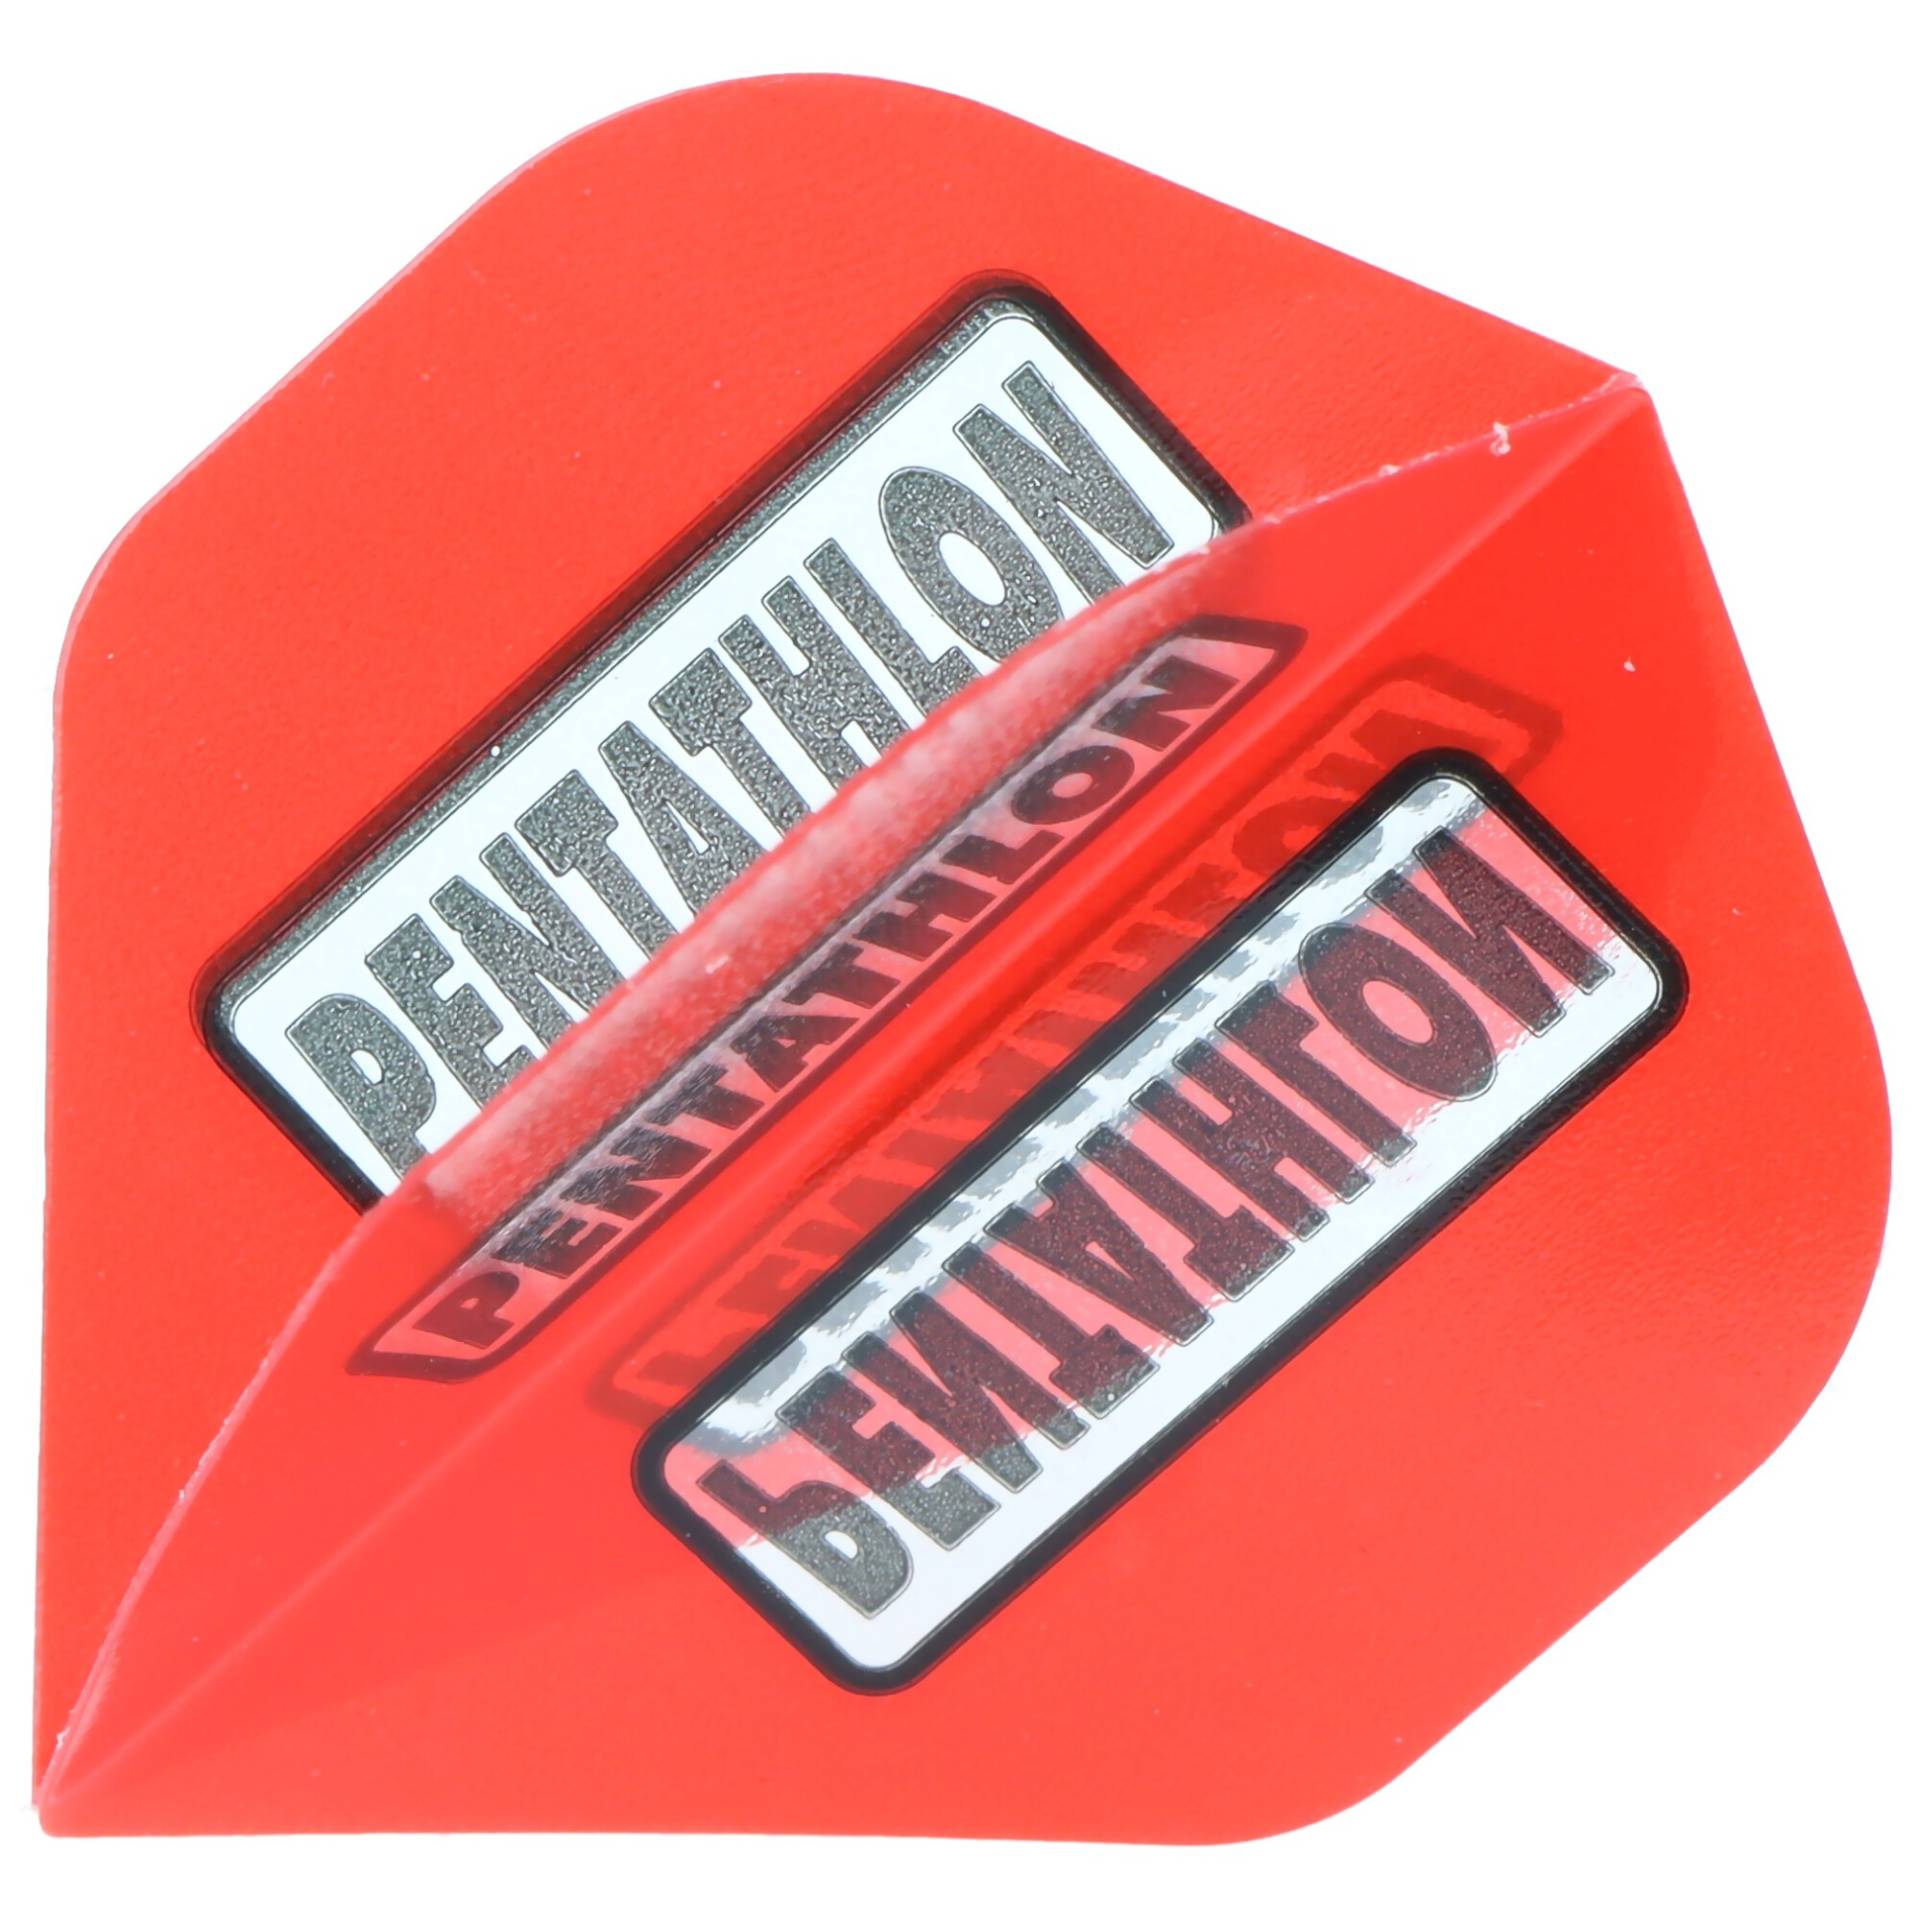 Pentathlon Dart Flights rot, HD100, 3 Stück von Pentathlon